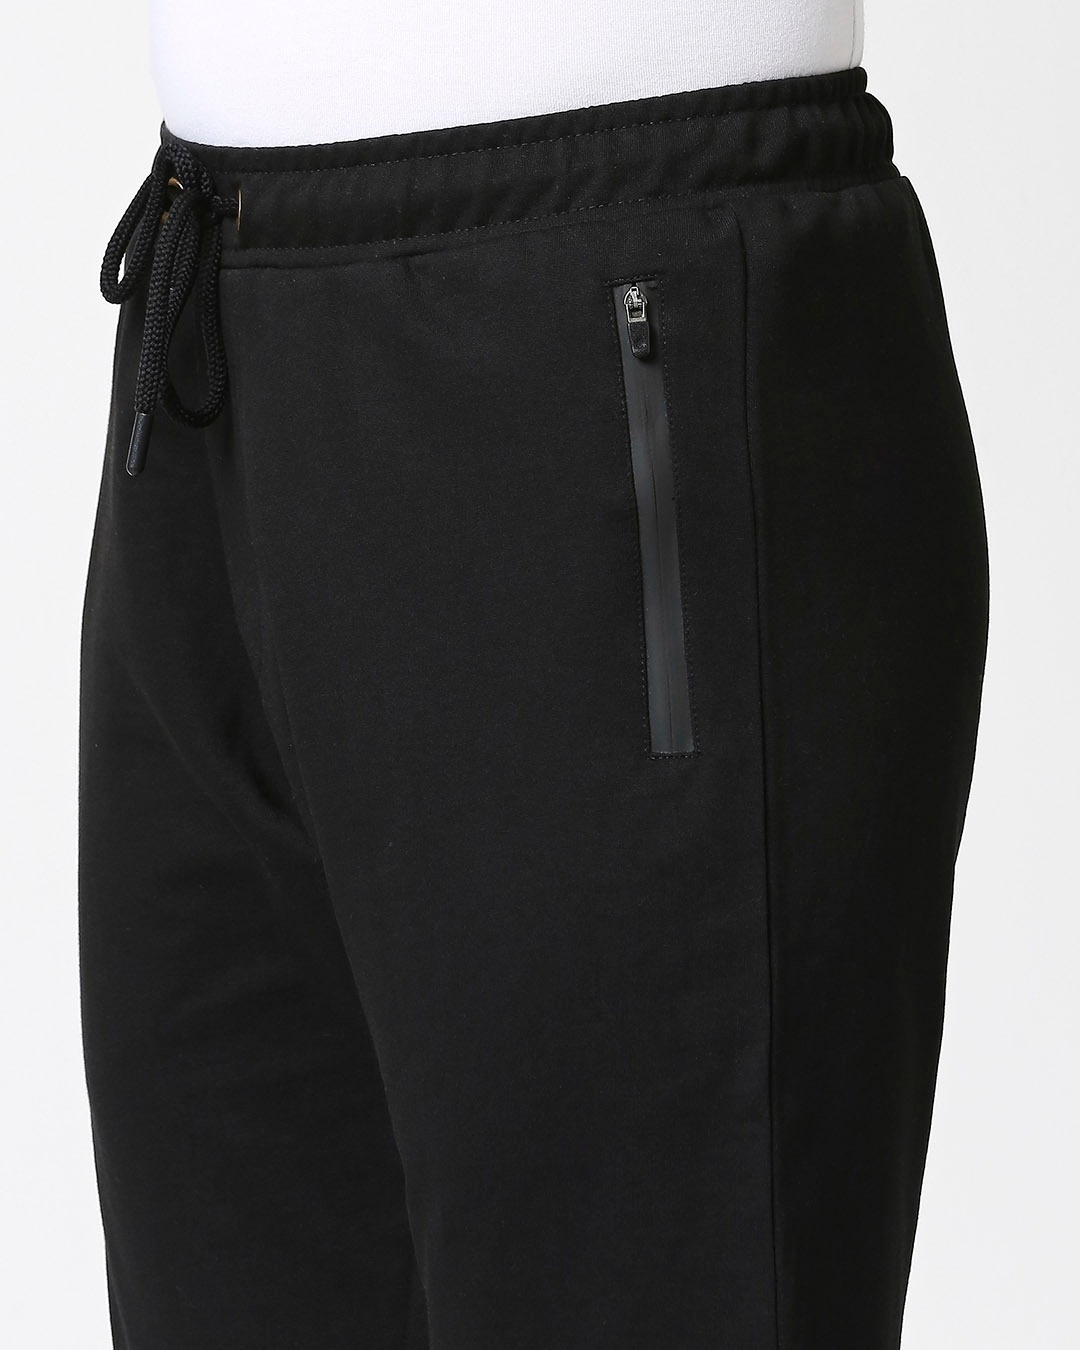 Shop Black Men's Casual Shorts With Zipper NR Plain